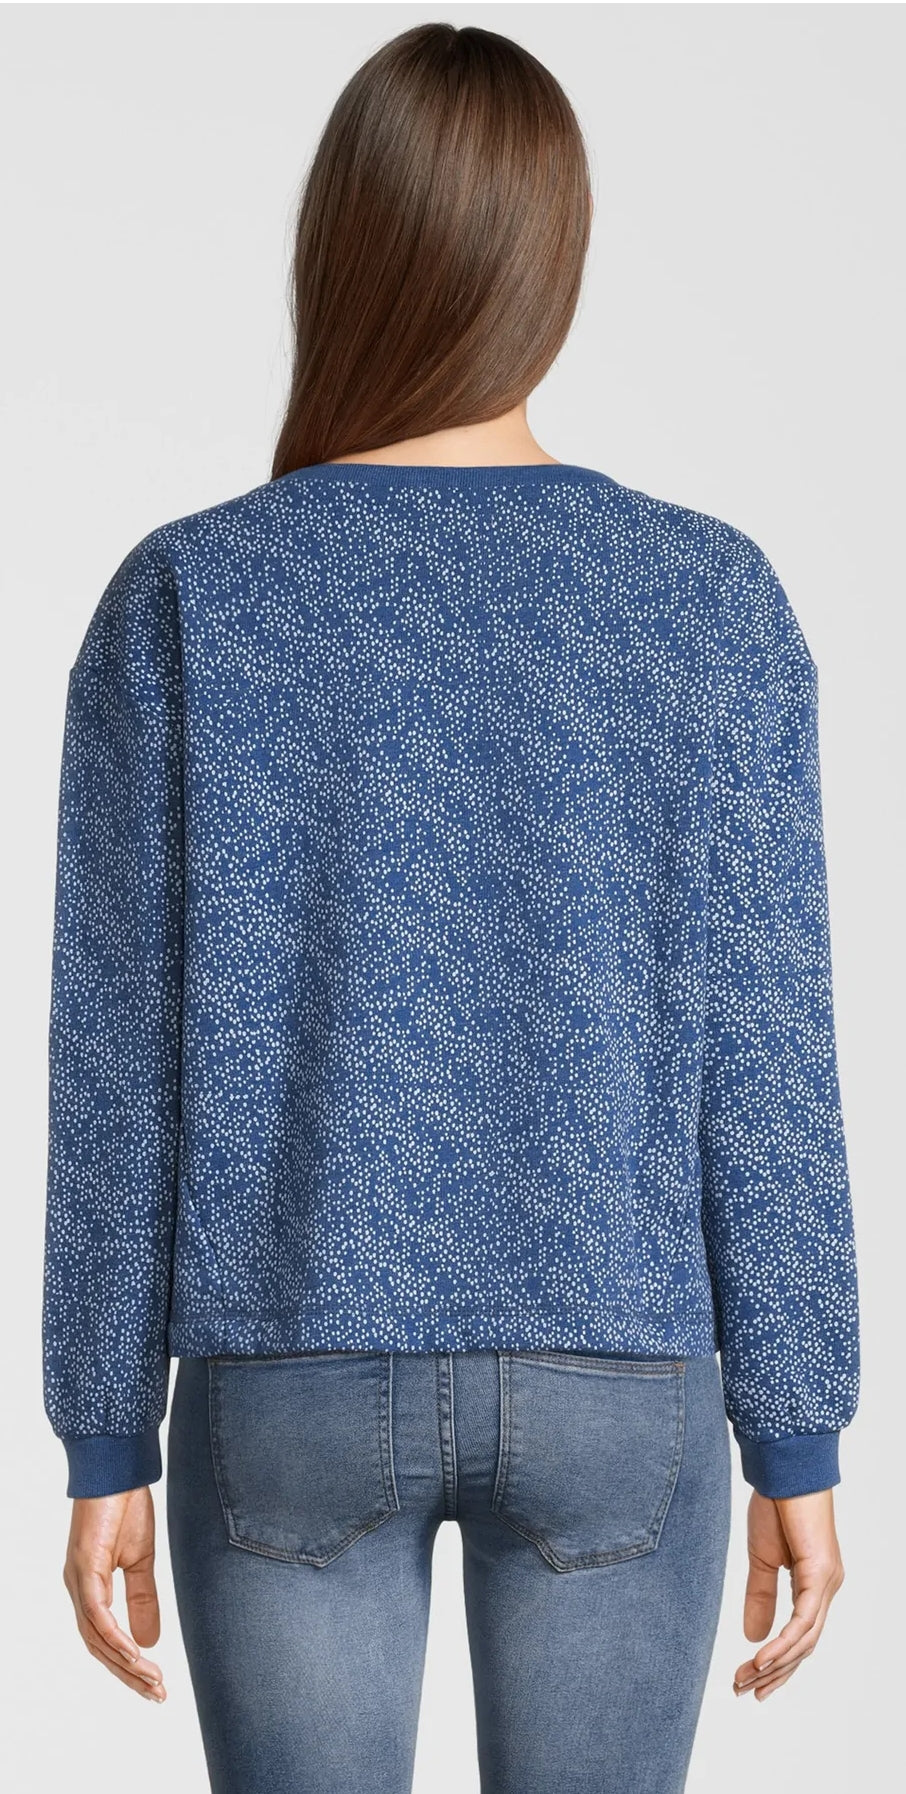 Rupert & Buckley Womens 'Bantham' Classic Crew Sweatshirt - Indigo Confetti